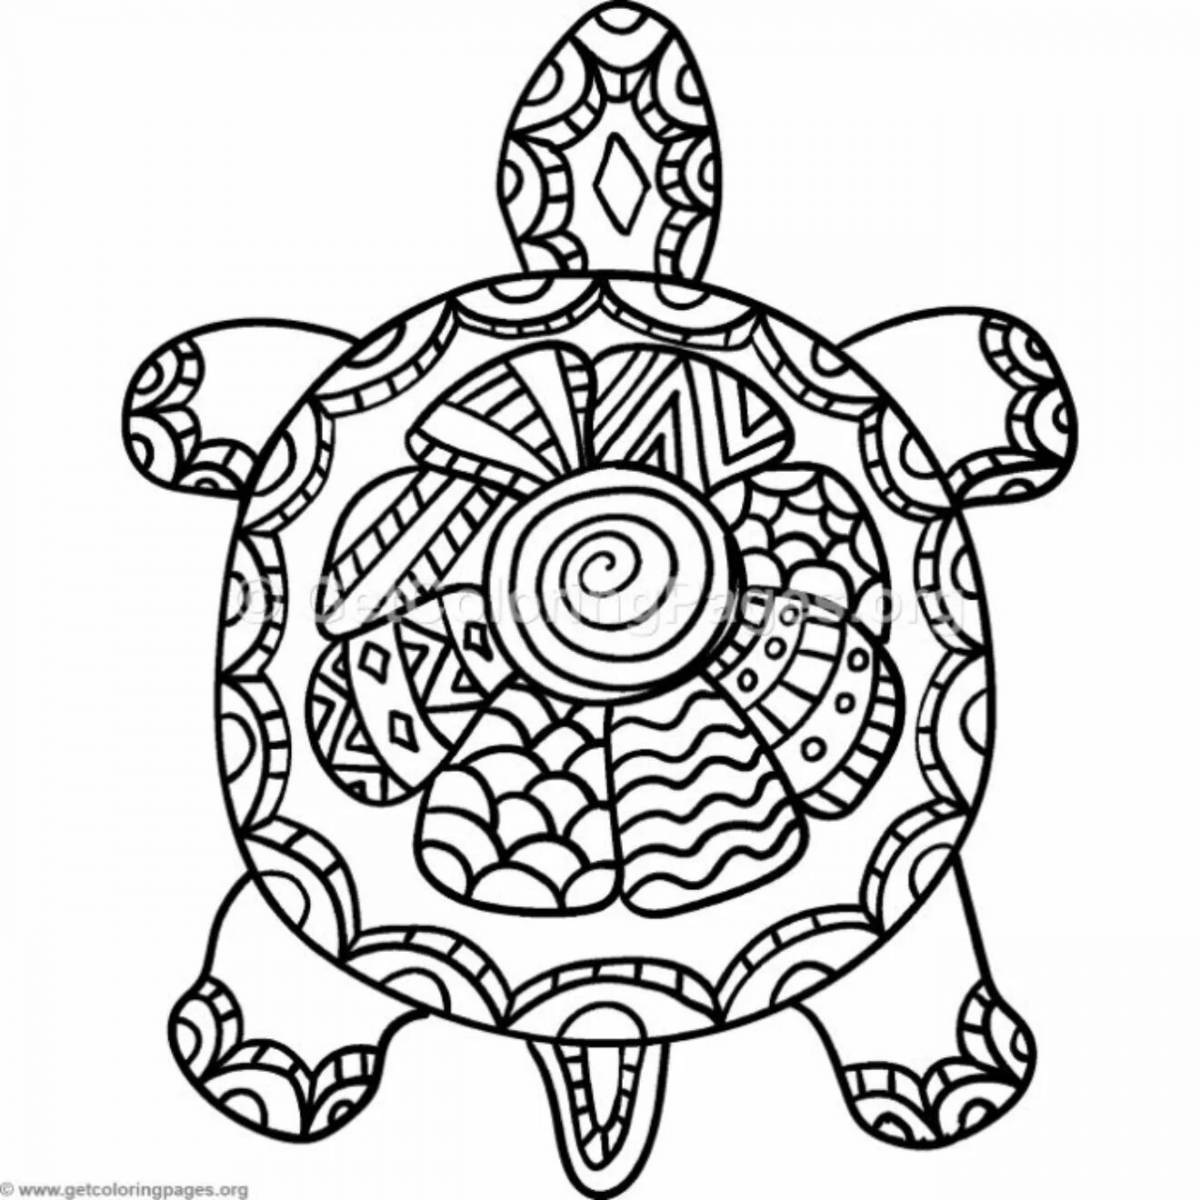 Exquisite anti-stress turtle coloring book